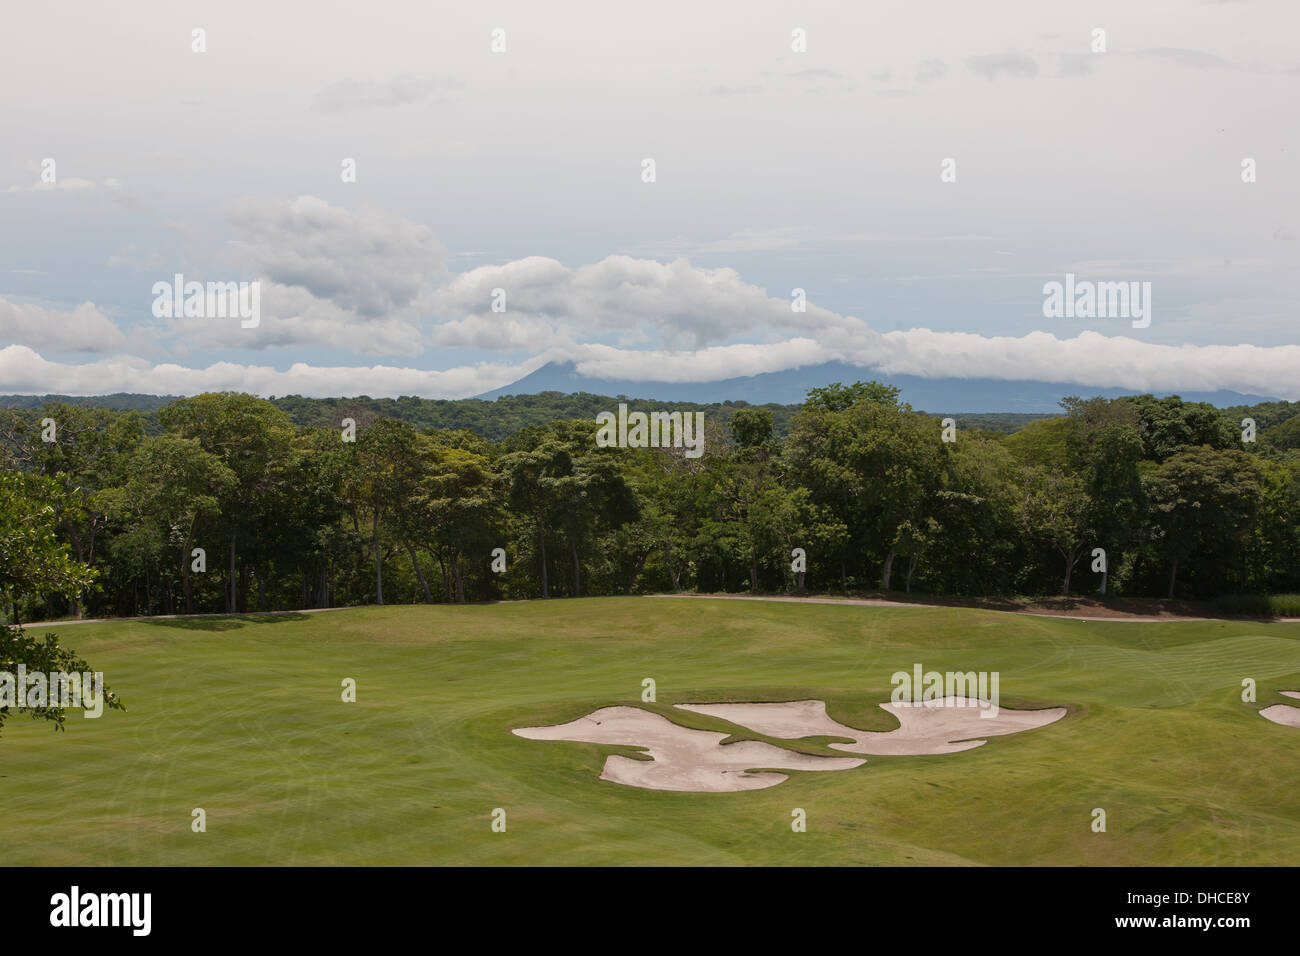 Arnold Palmer Signature Golf Course at Four Seasons Costa Rica on Peninsula Papagayo. Stock Photo